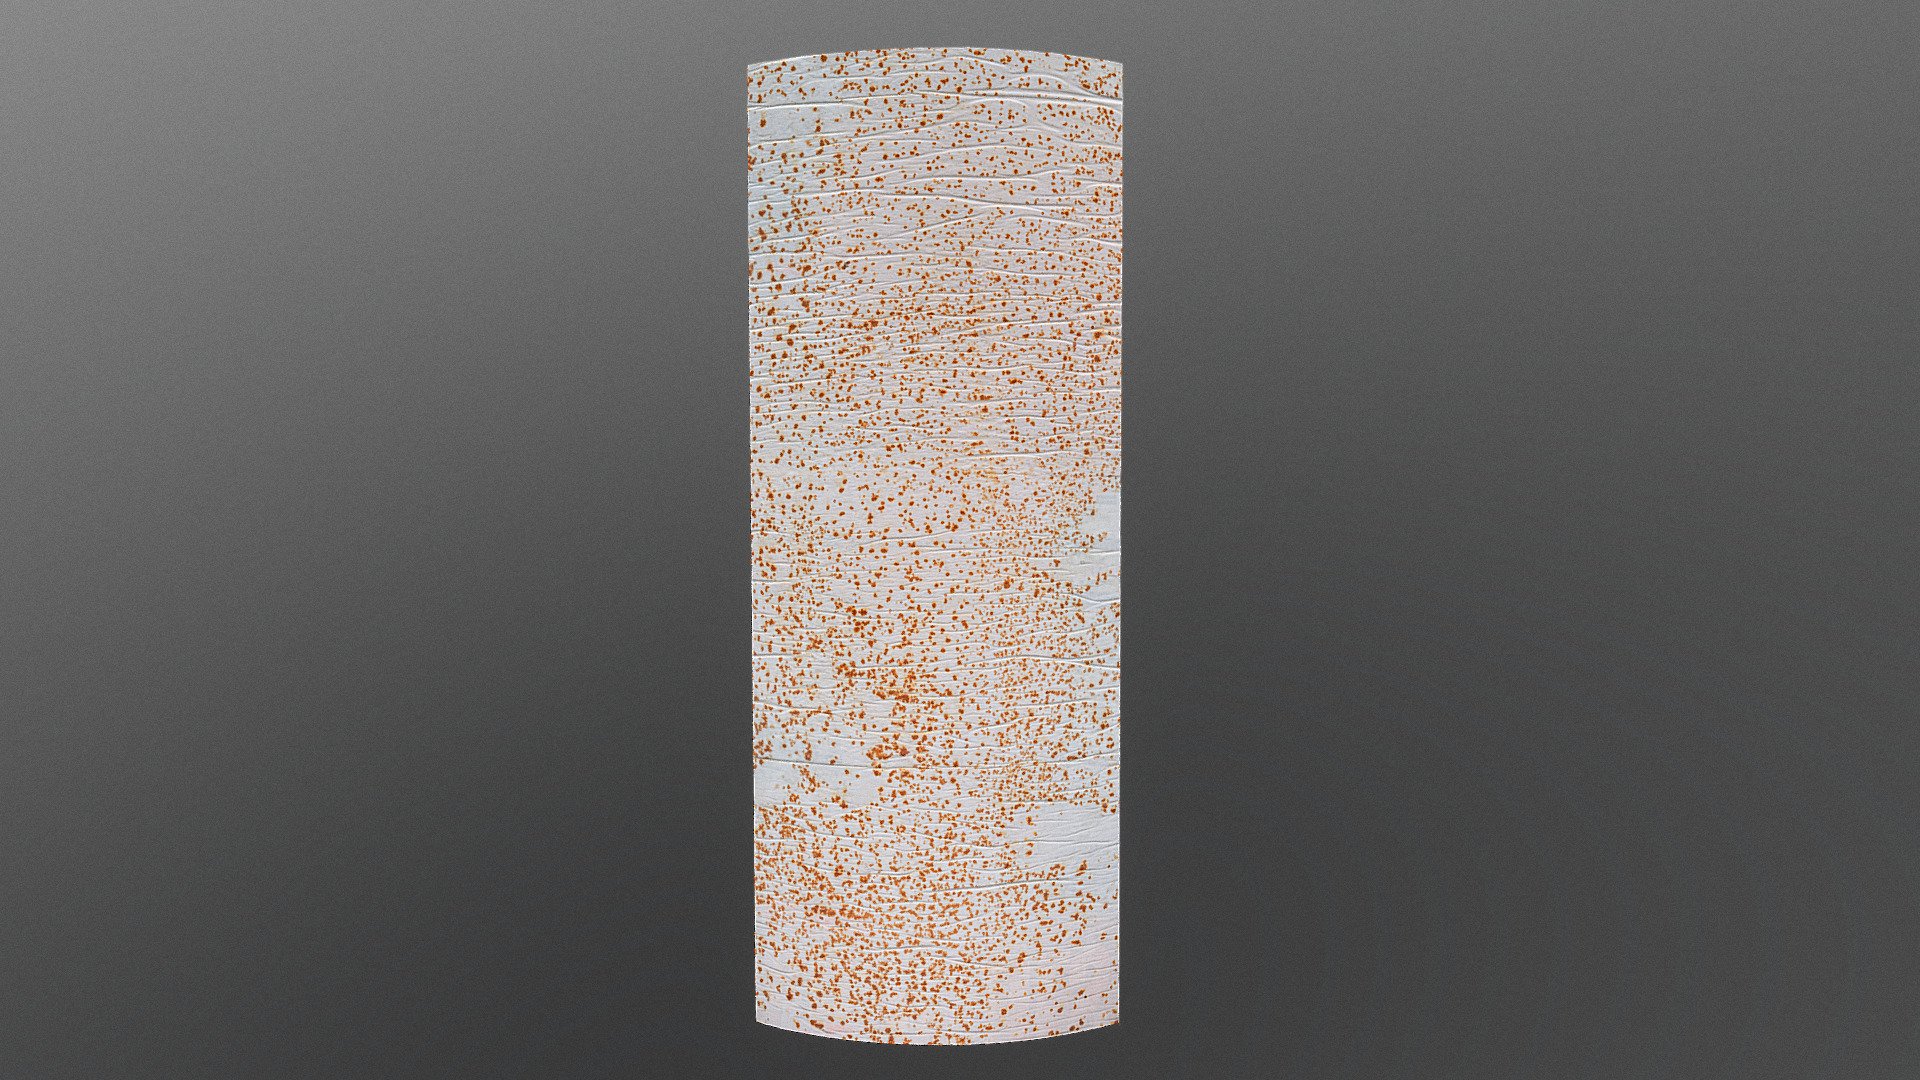 White paper rust texture